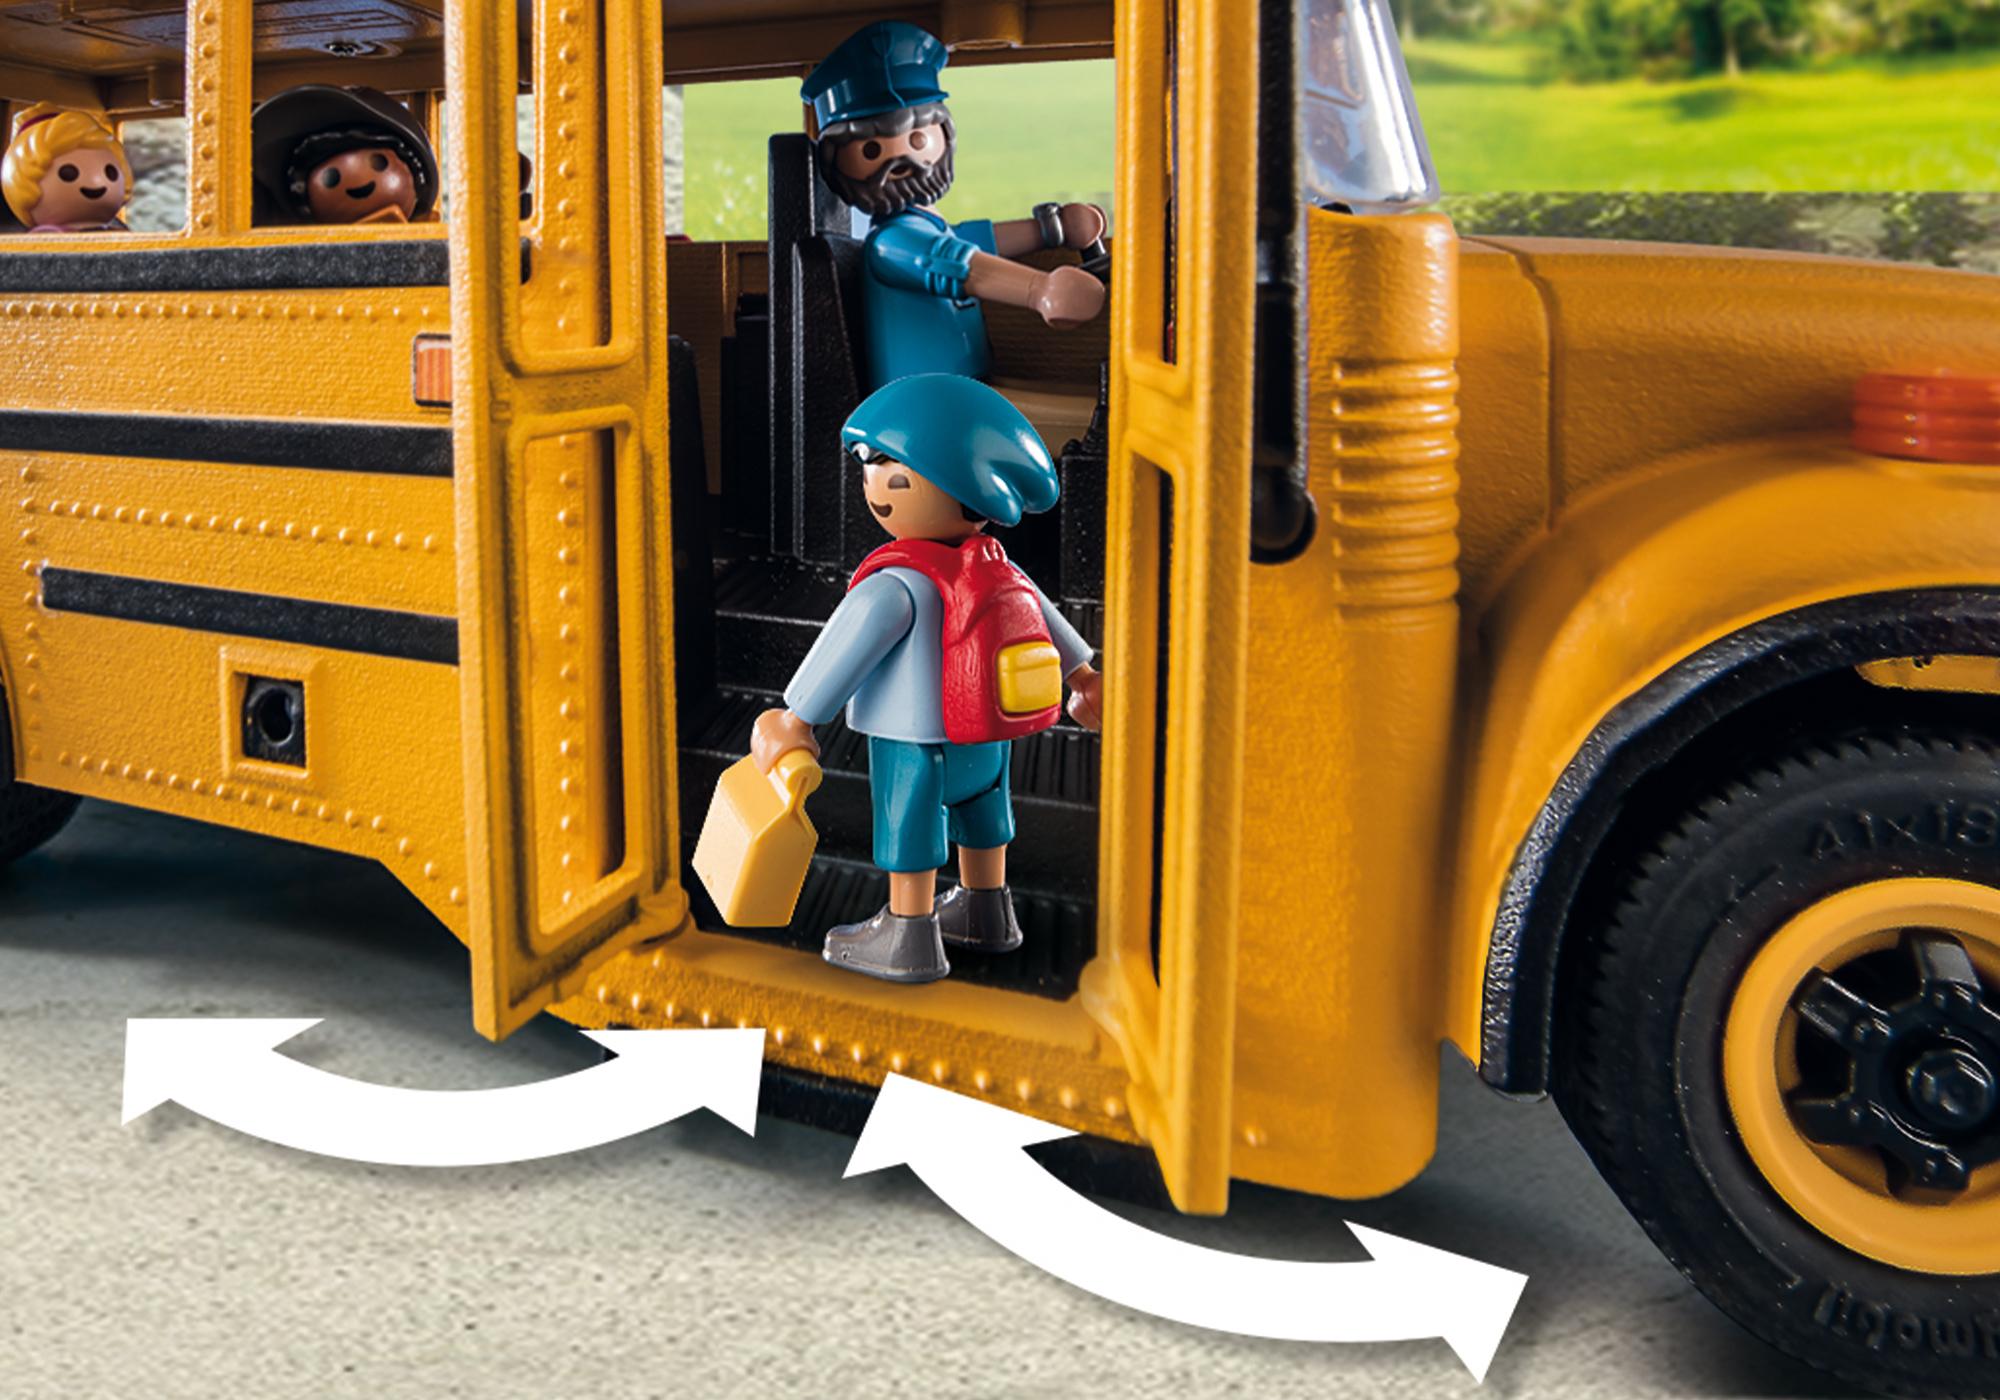 Playmobil School Bus (5940) – demo-kimmyshop